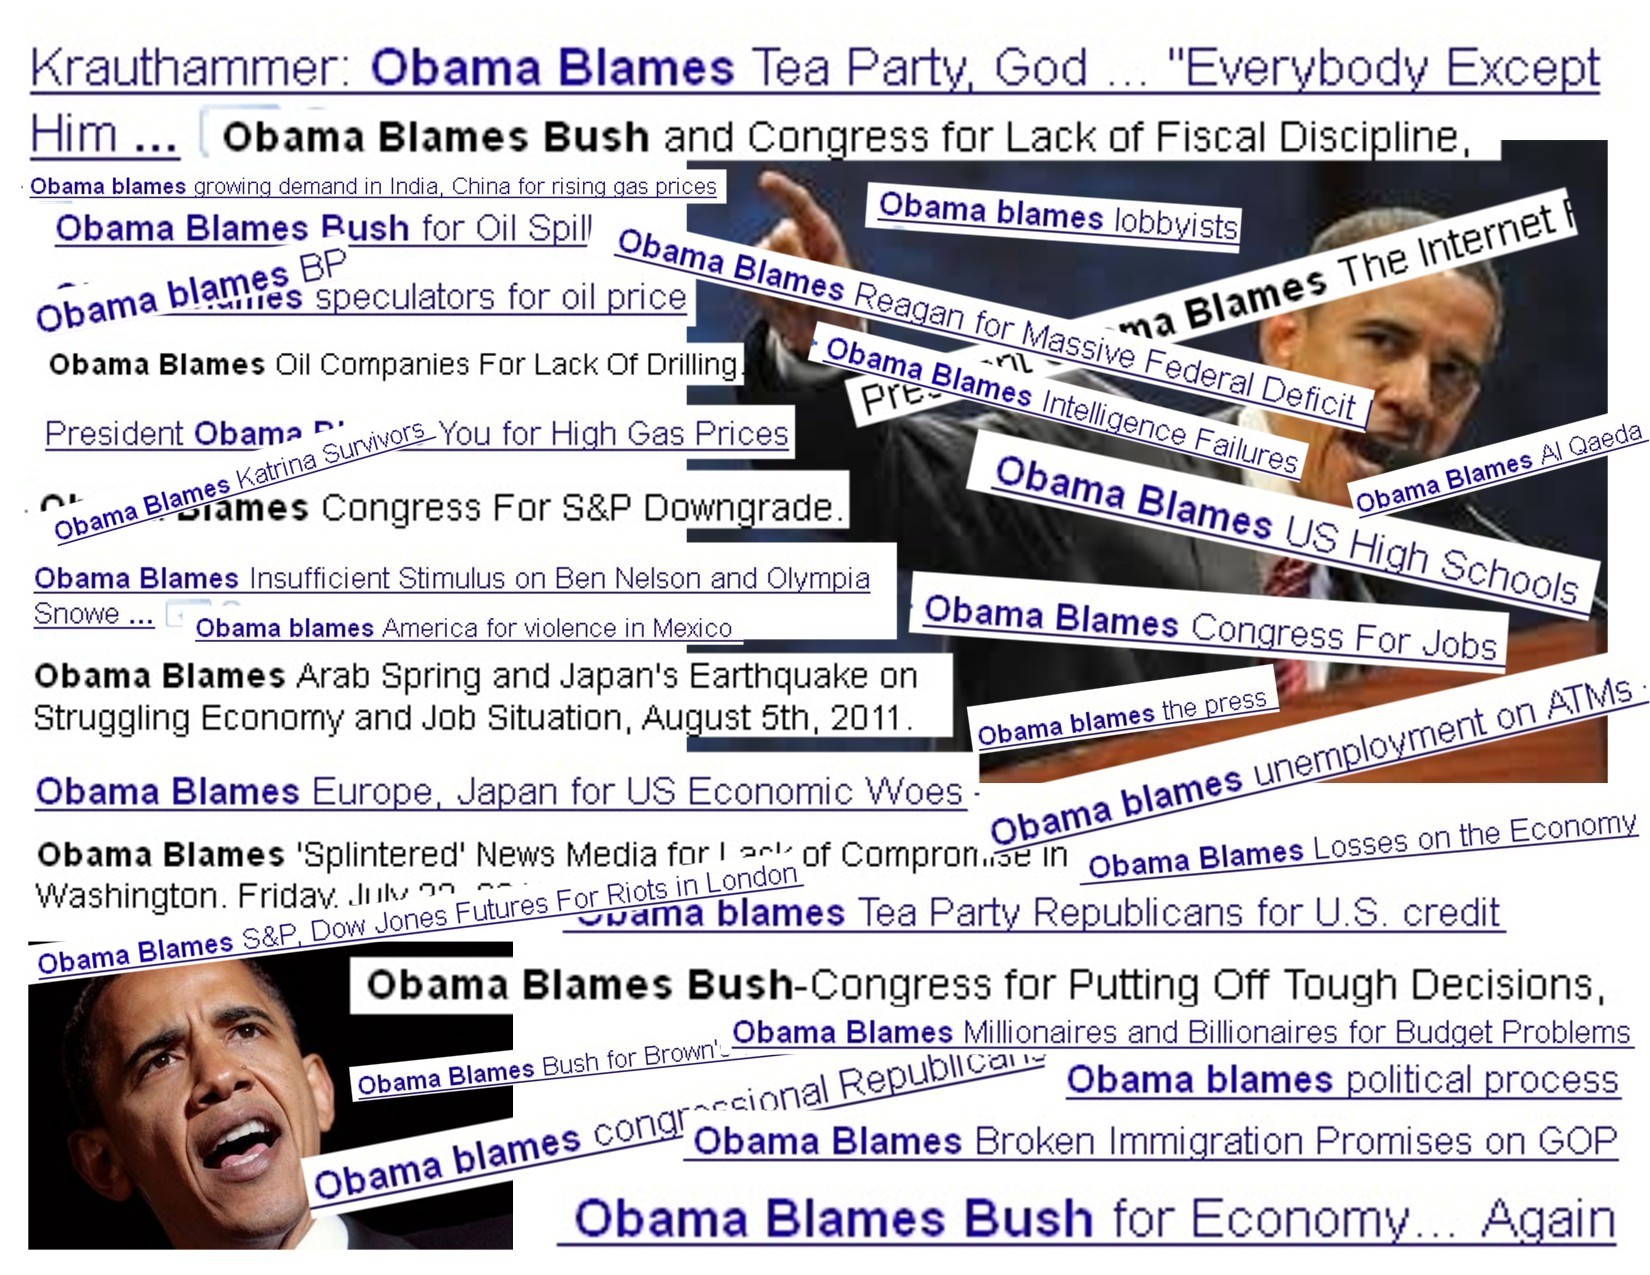 http://polination.files.wordpress.com/2011/08/obama-blames-everyone-but-himself.jpg